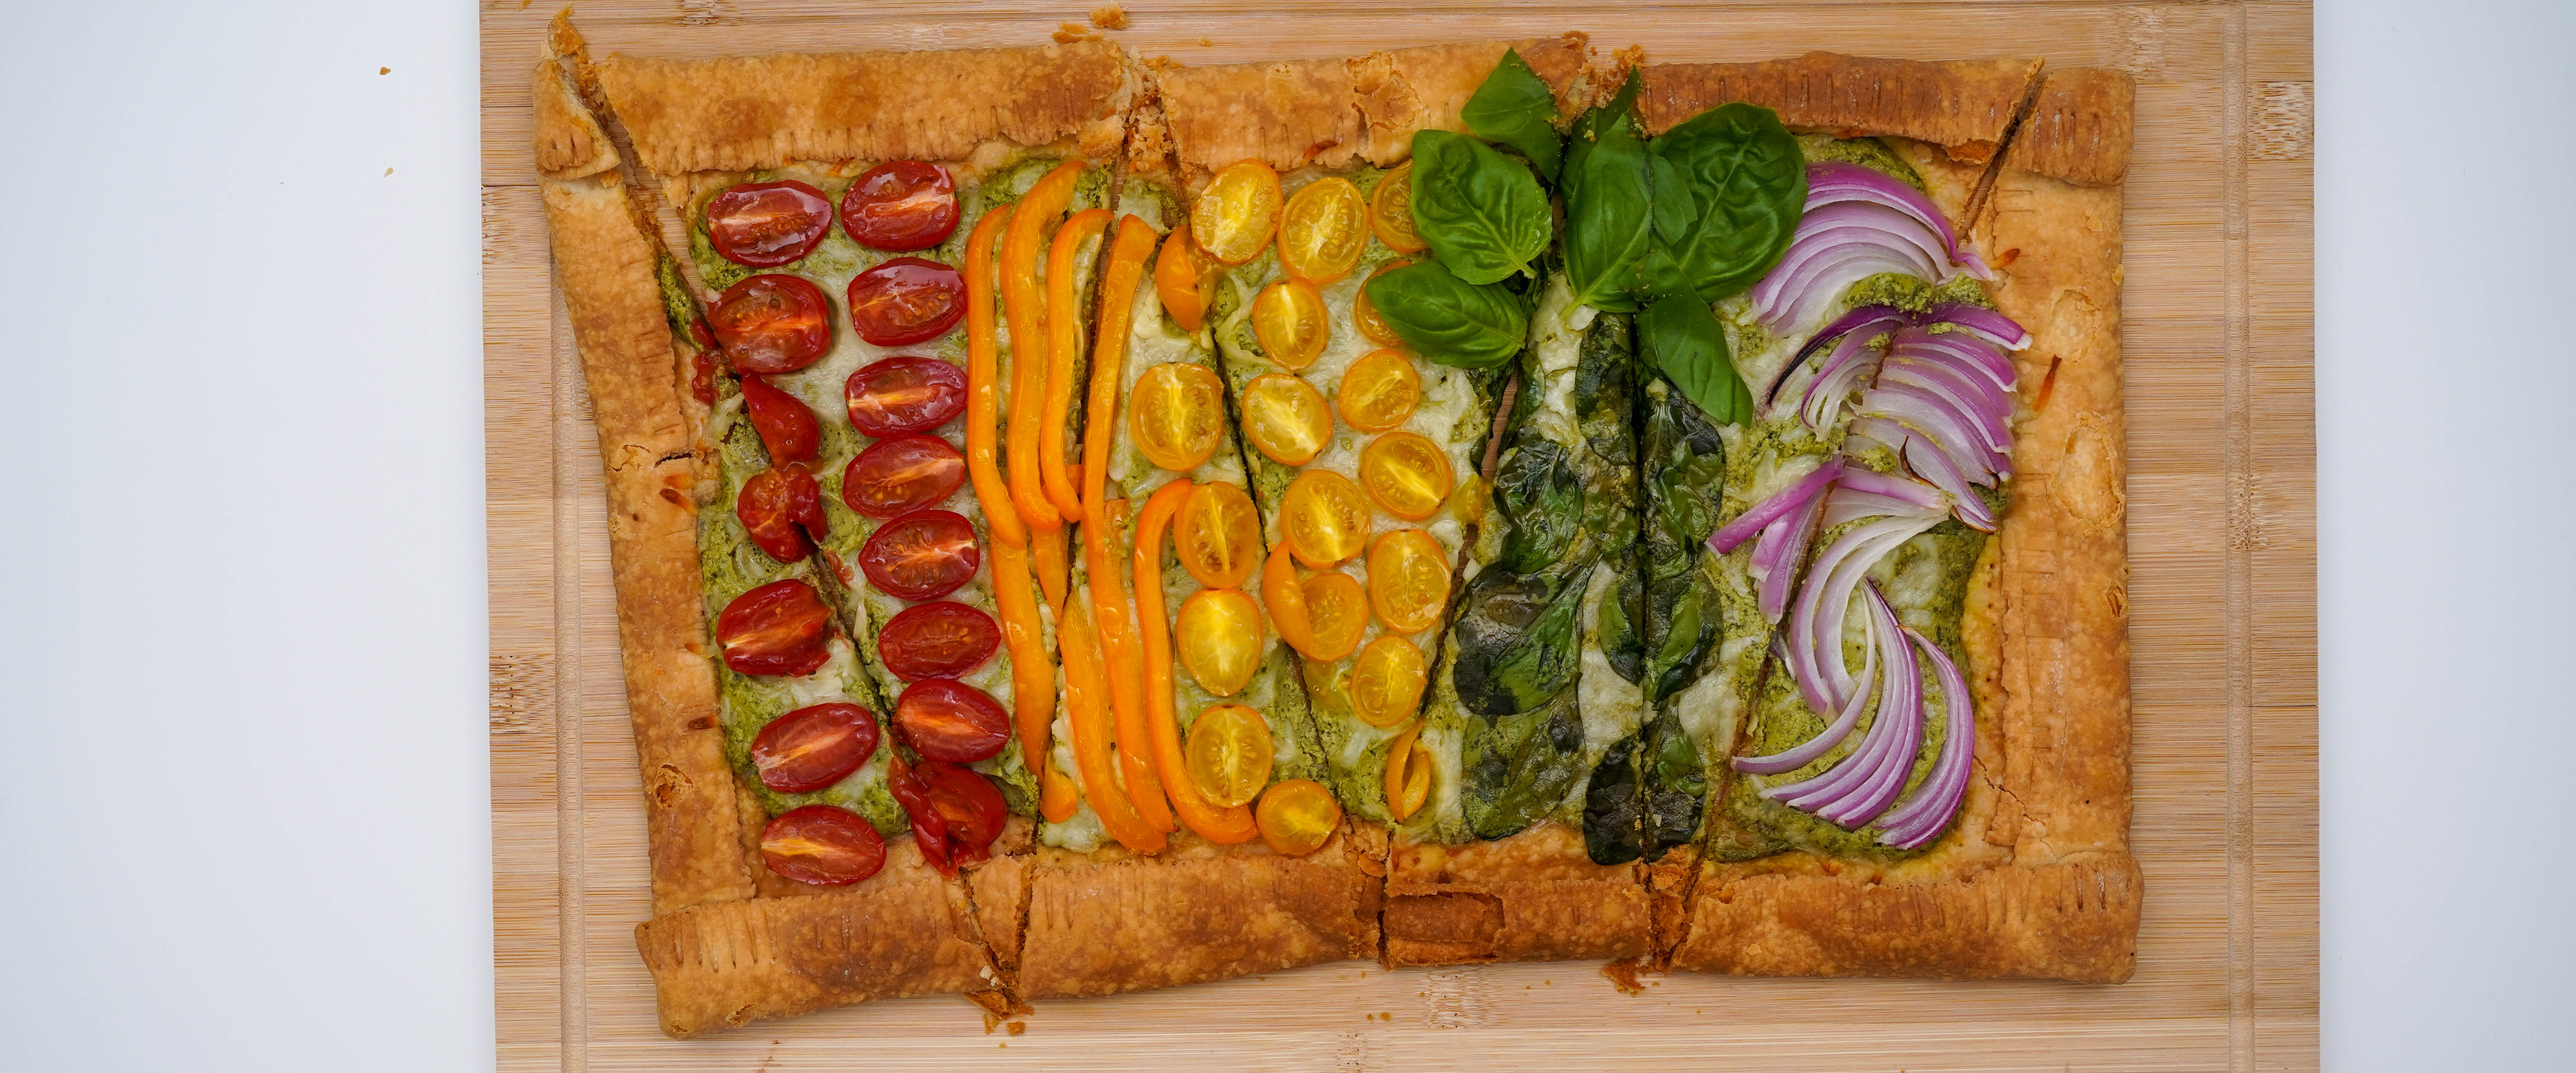 Antipasto arcobaleno di verdure con salsa al pesto